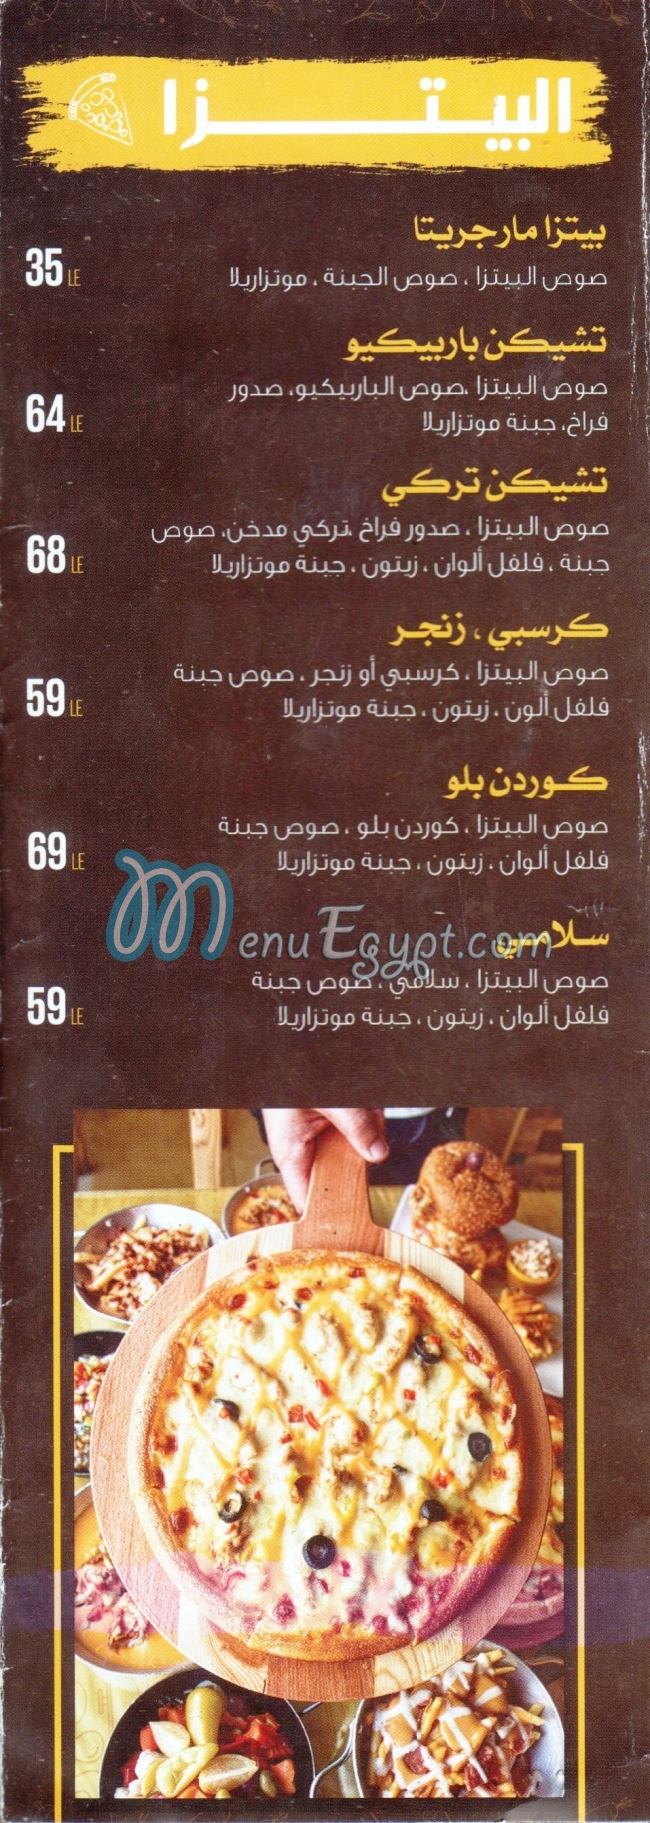 Tasa and Gebna menu Egypt